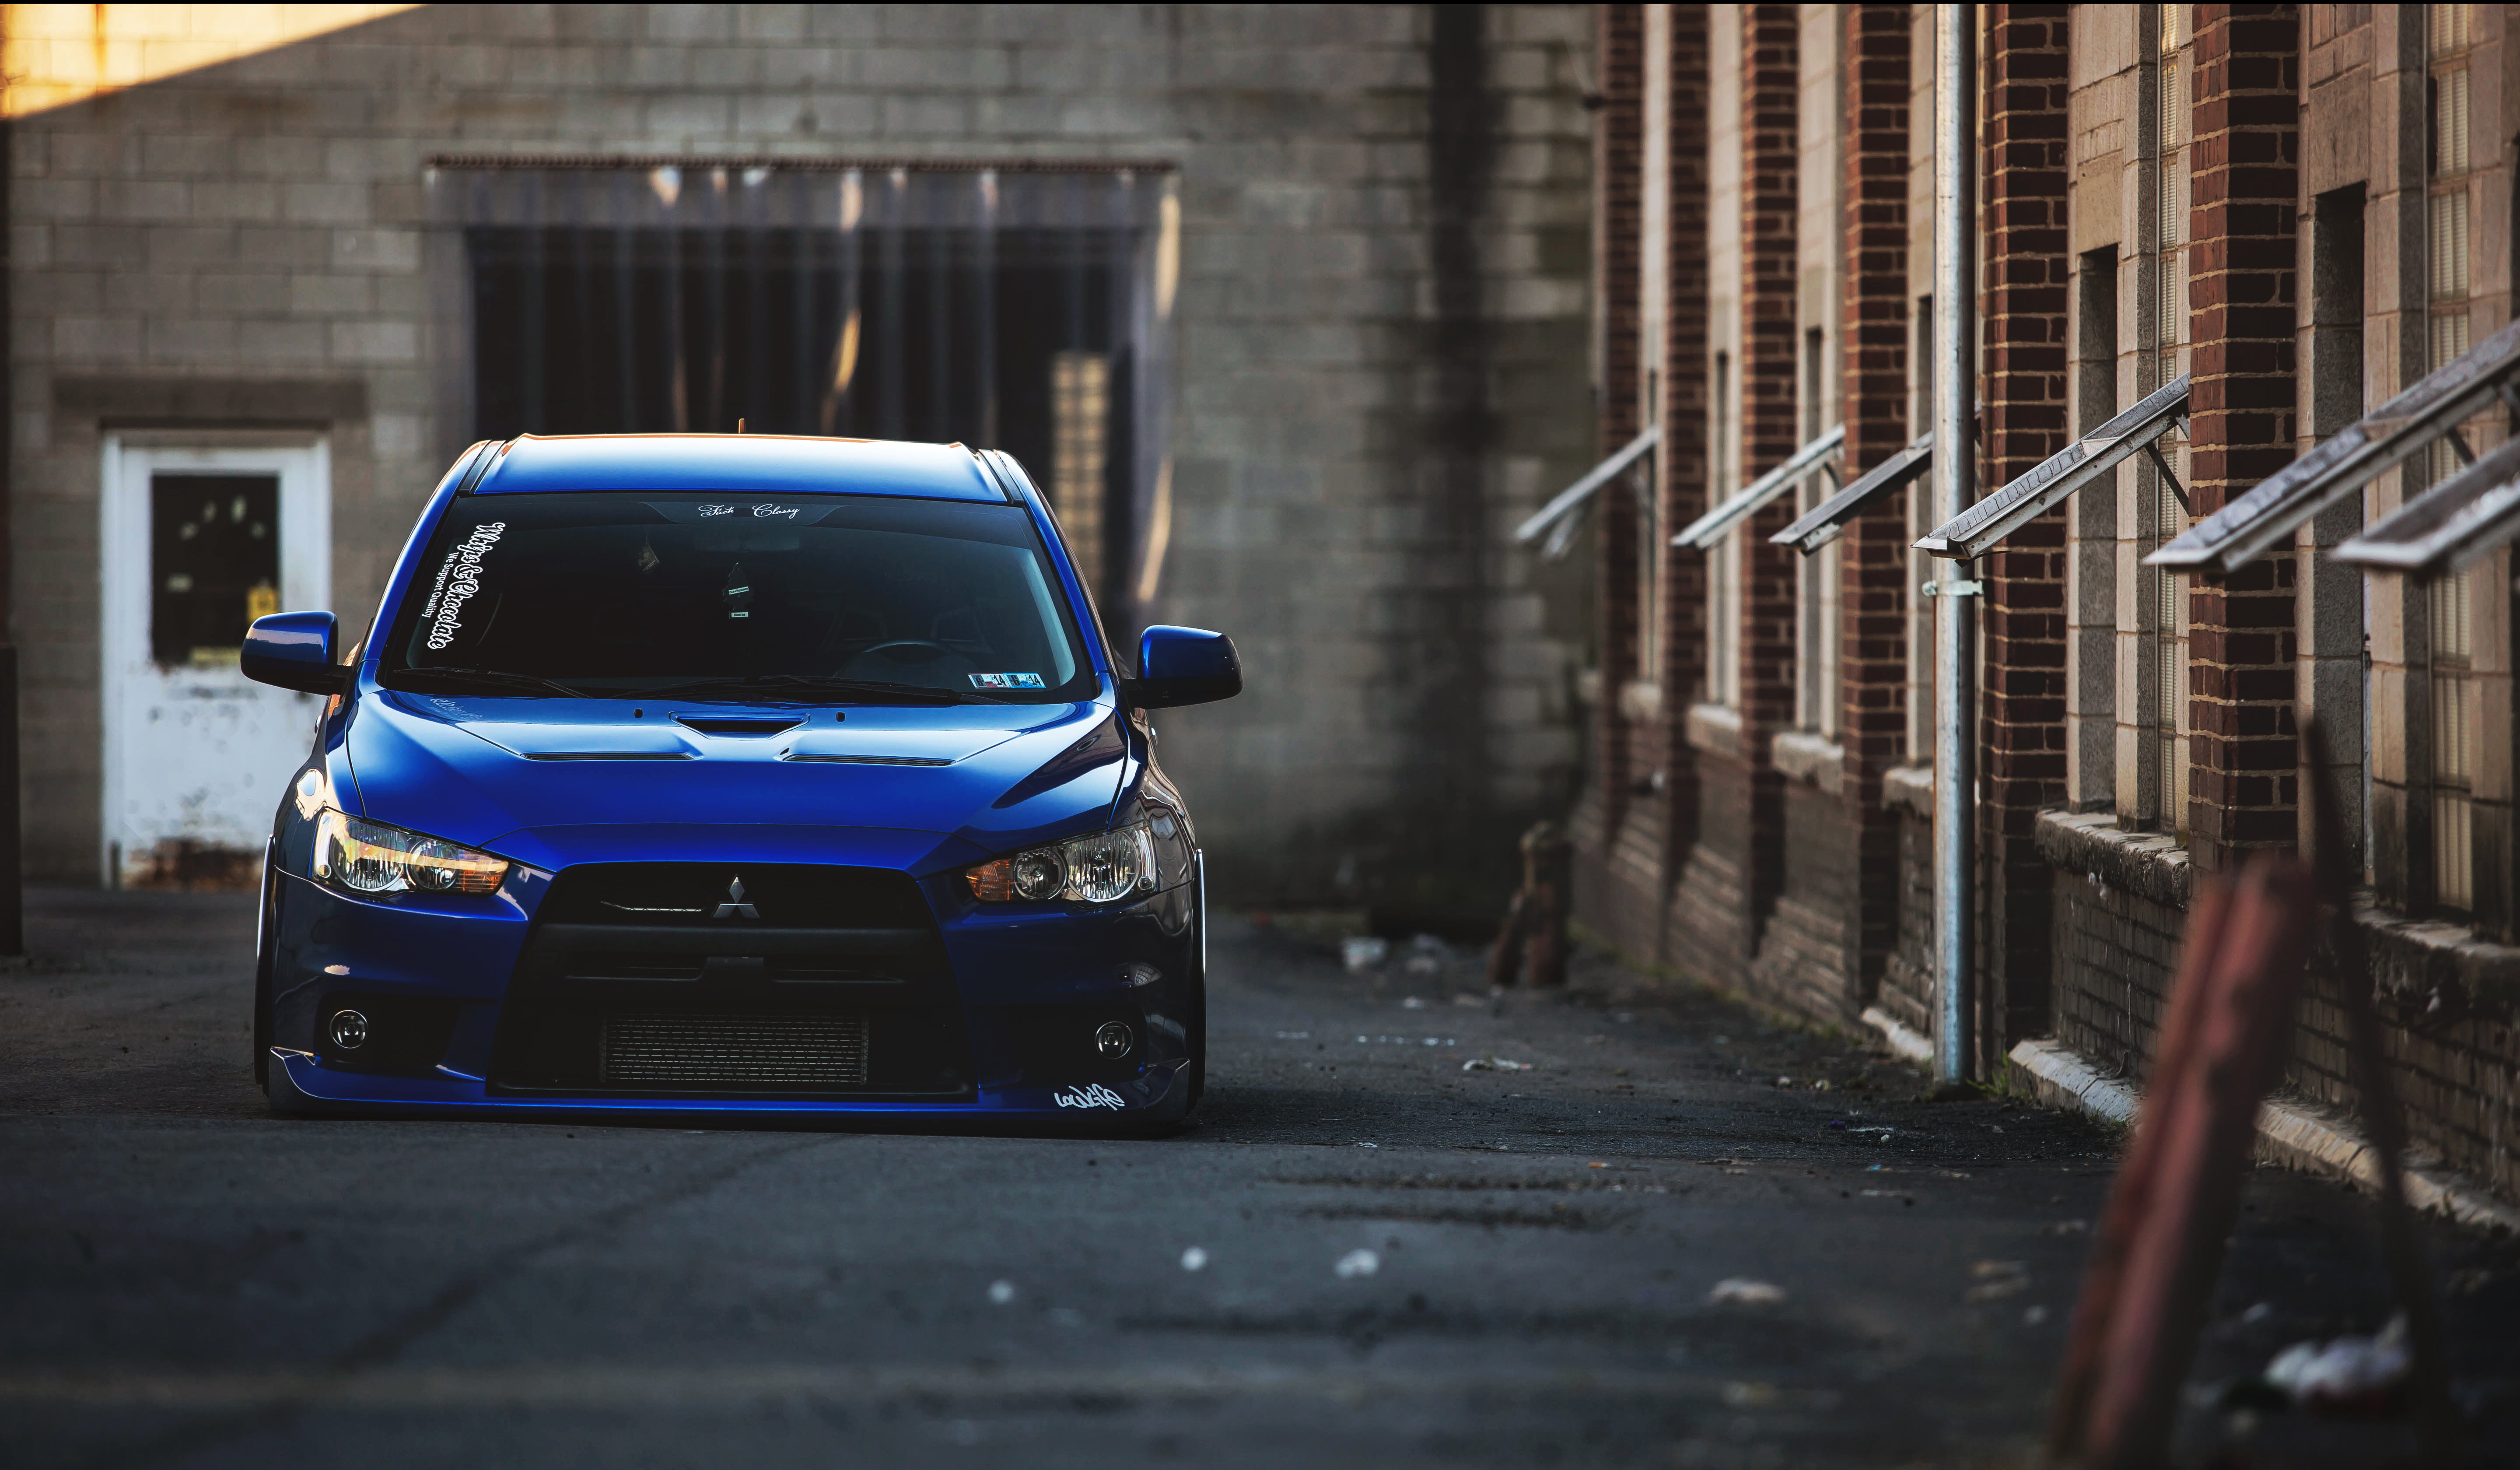 blue Mitsubishi Lancer sedan, Desktop, Evolution, Car, Beautiful